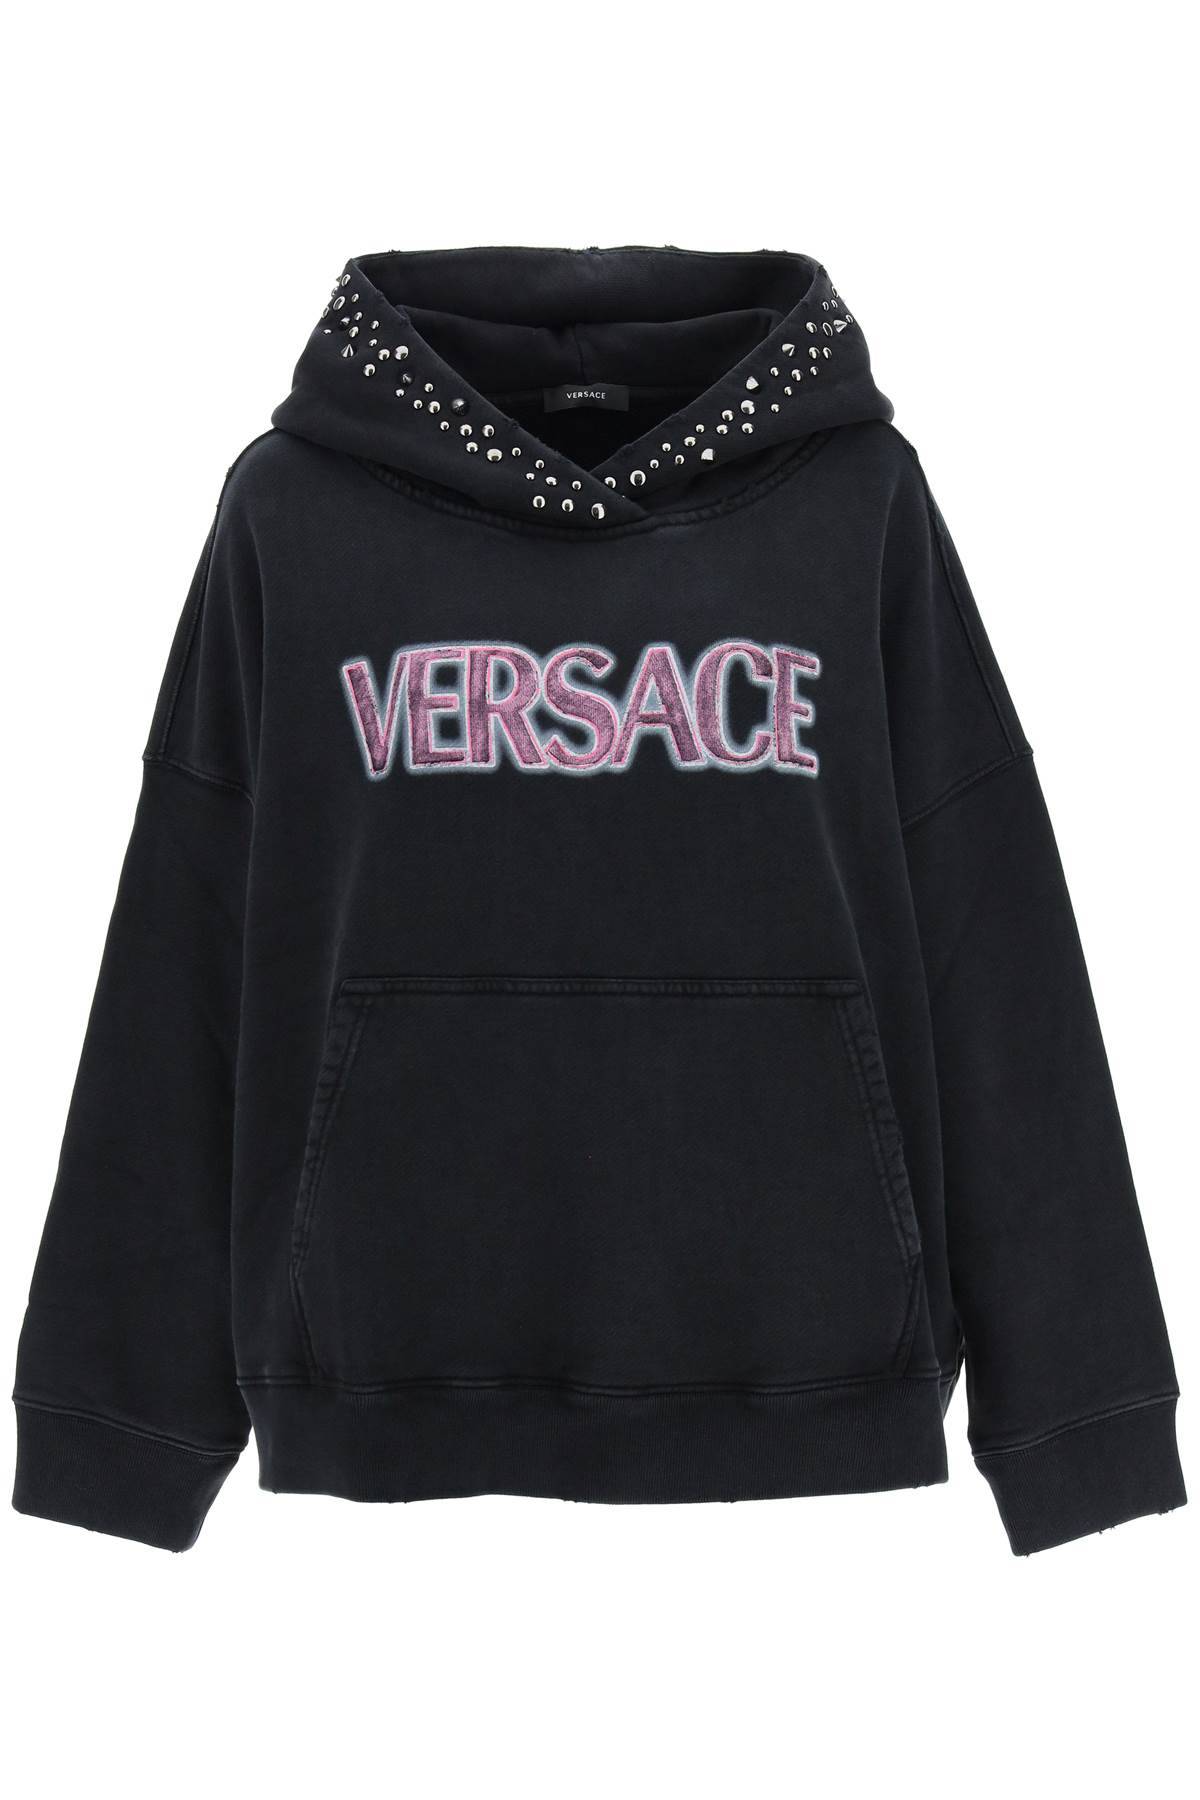 Versace VERSACE hoodie with studs